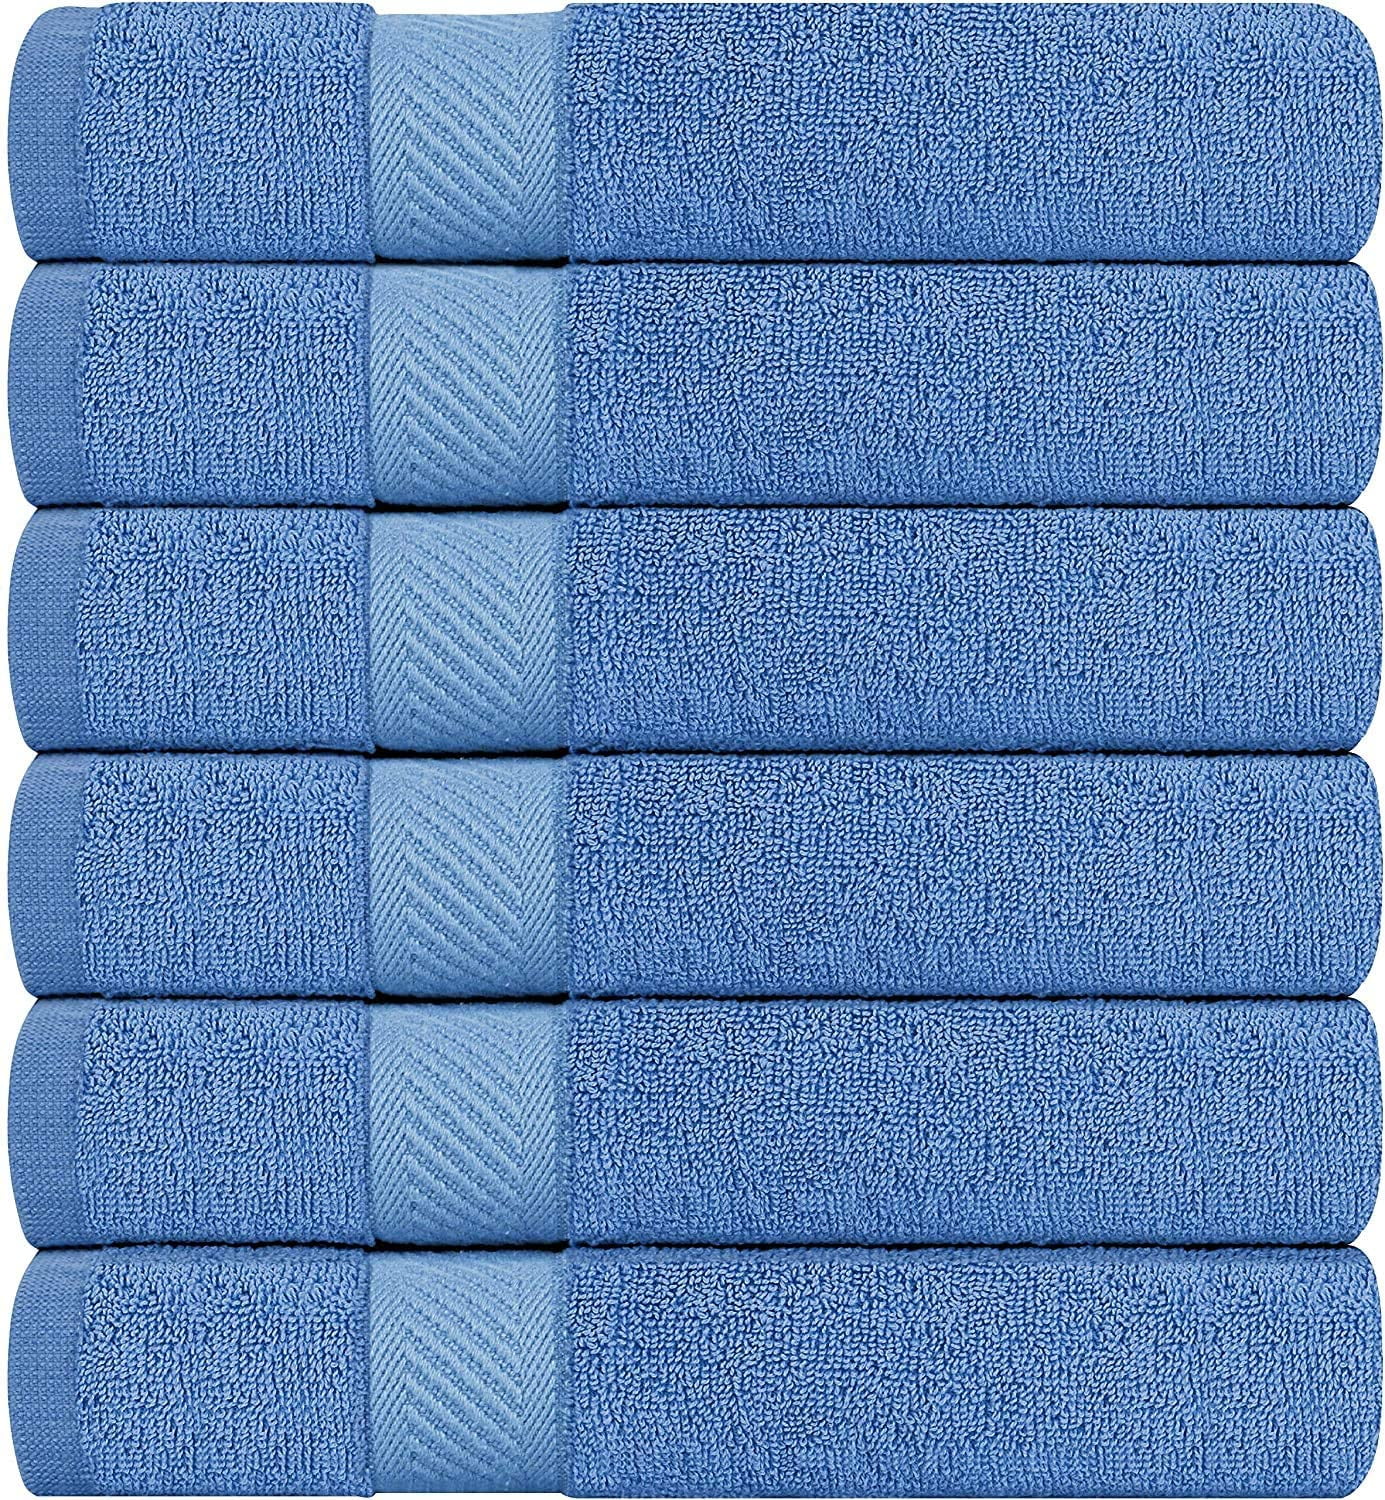 Striped Cotton Pool Towels White w/ Blue Stripe 22 x 44 Bulk Value 12 Pack 